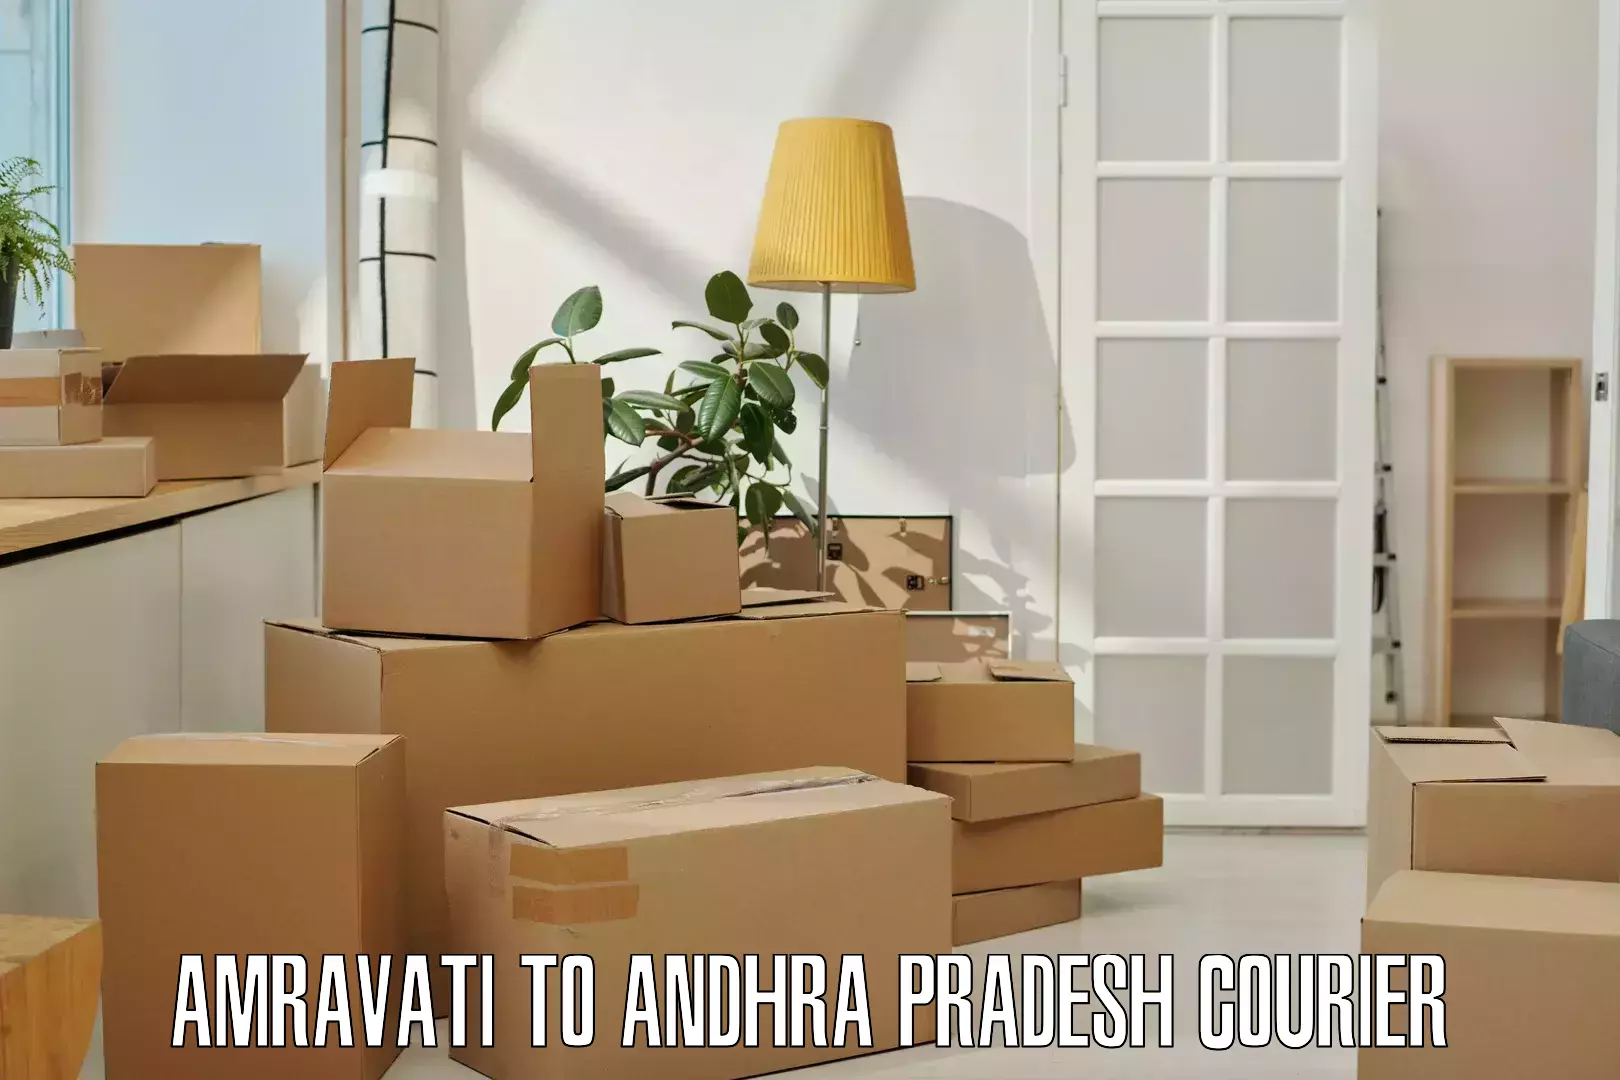 Courier service innovation Amravati to Andhra Pradesh